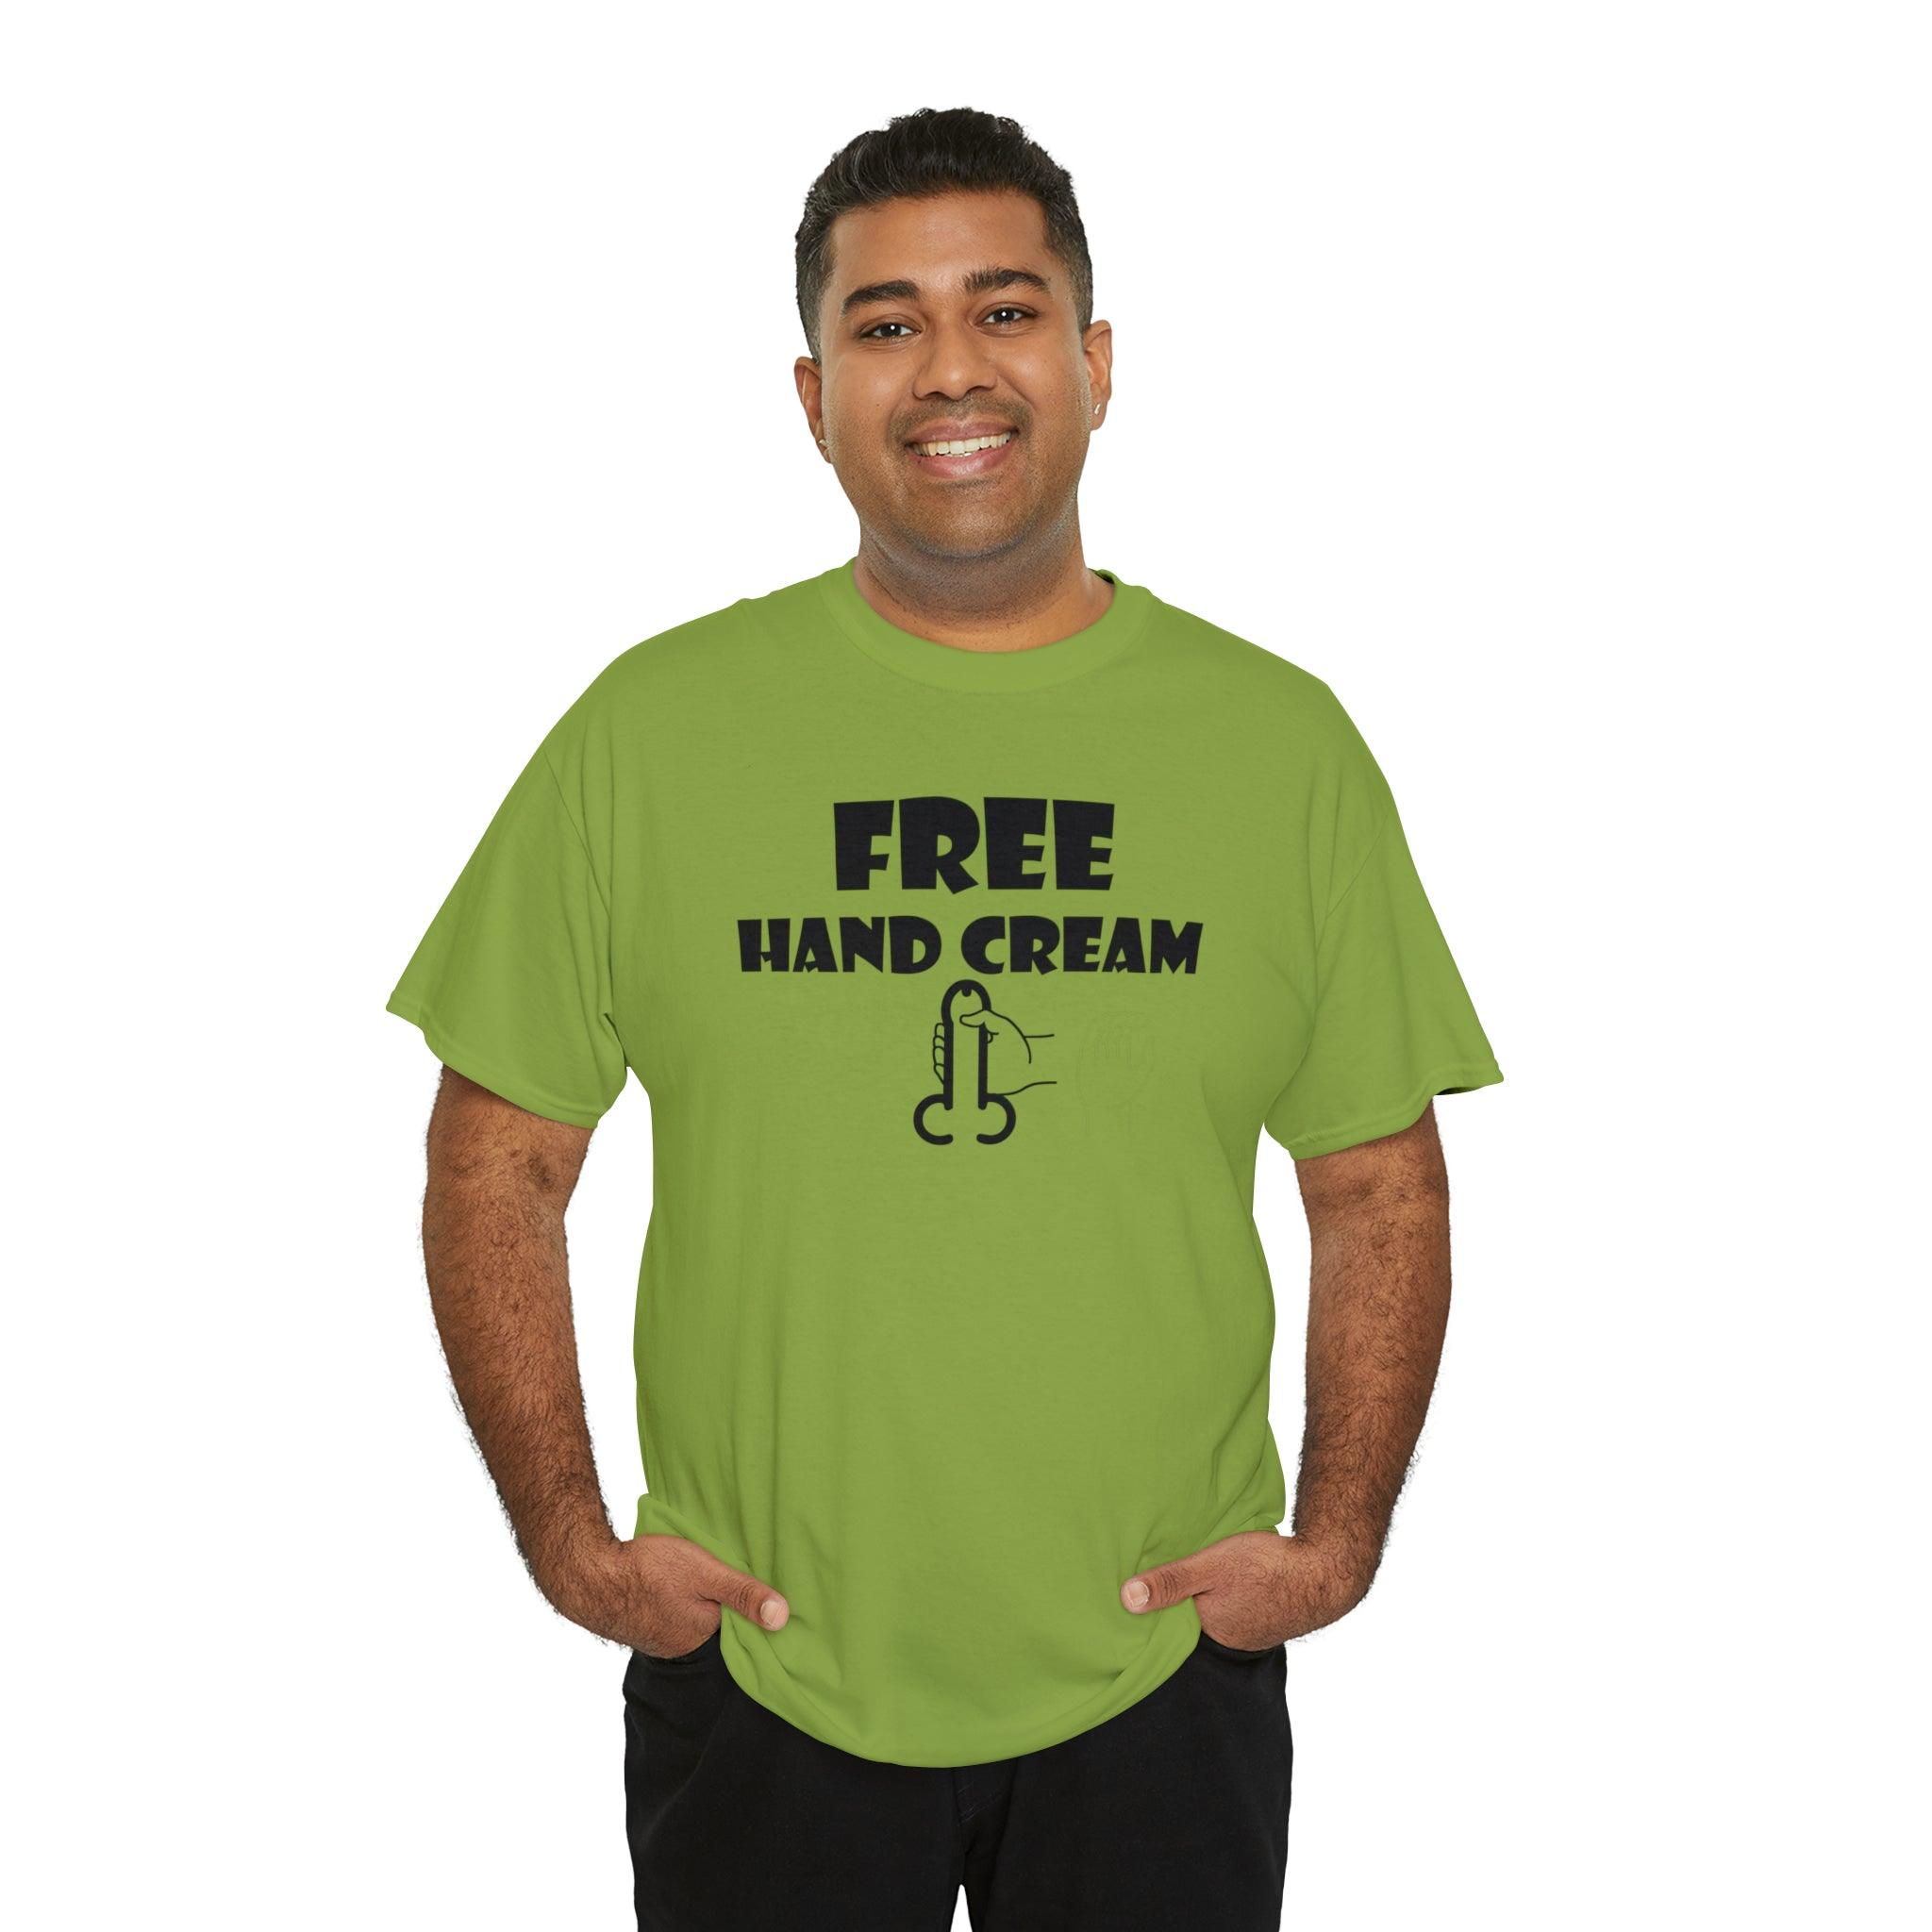 Free Hand Cream funny mens humor t-shirt about masturbation photo